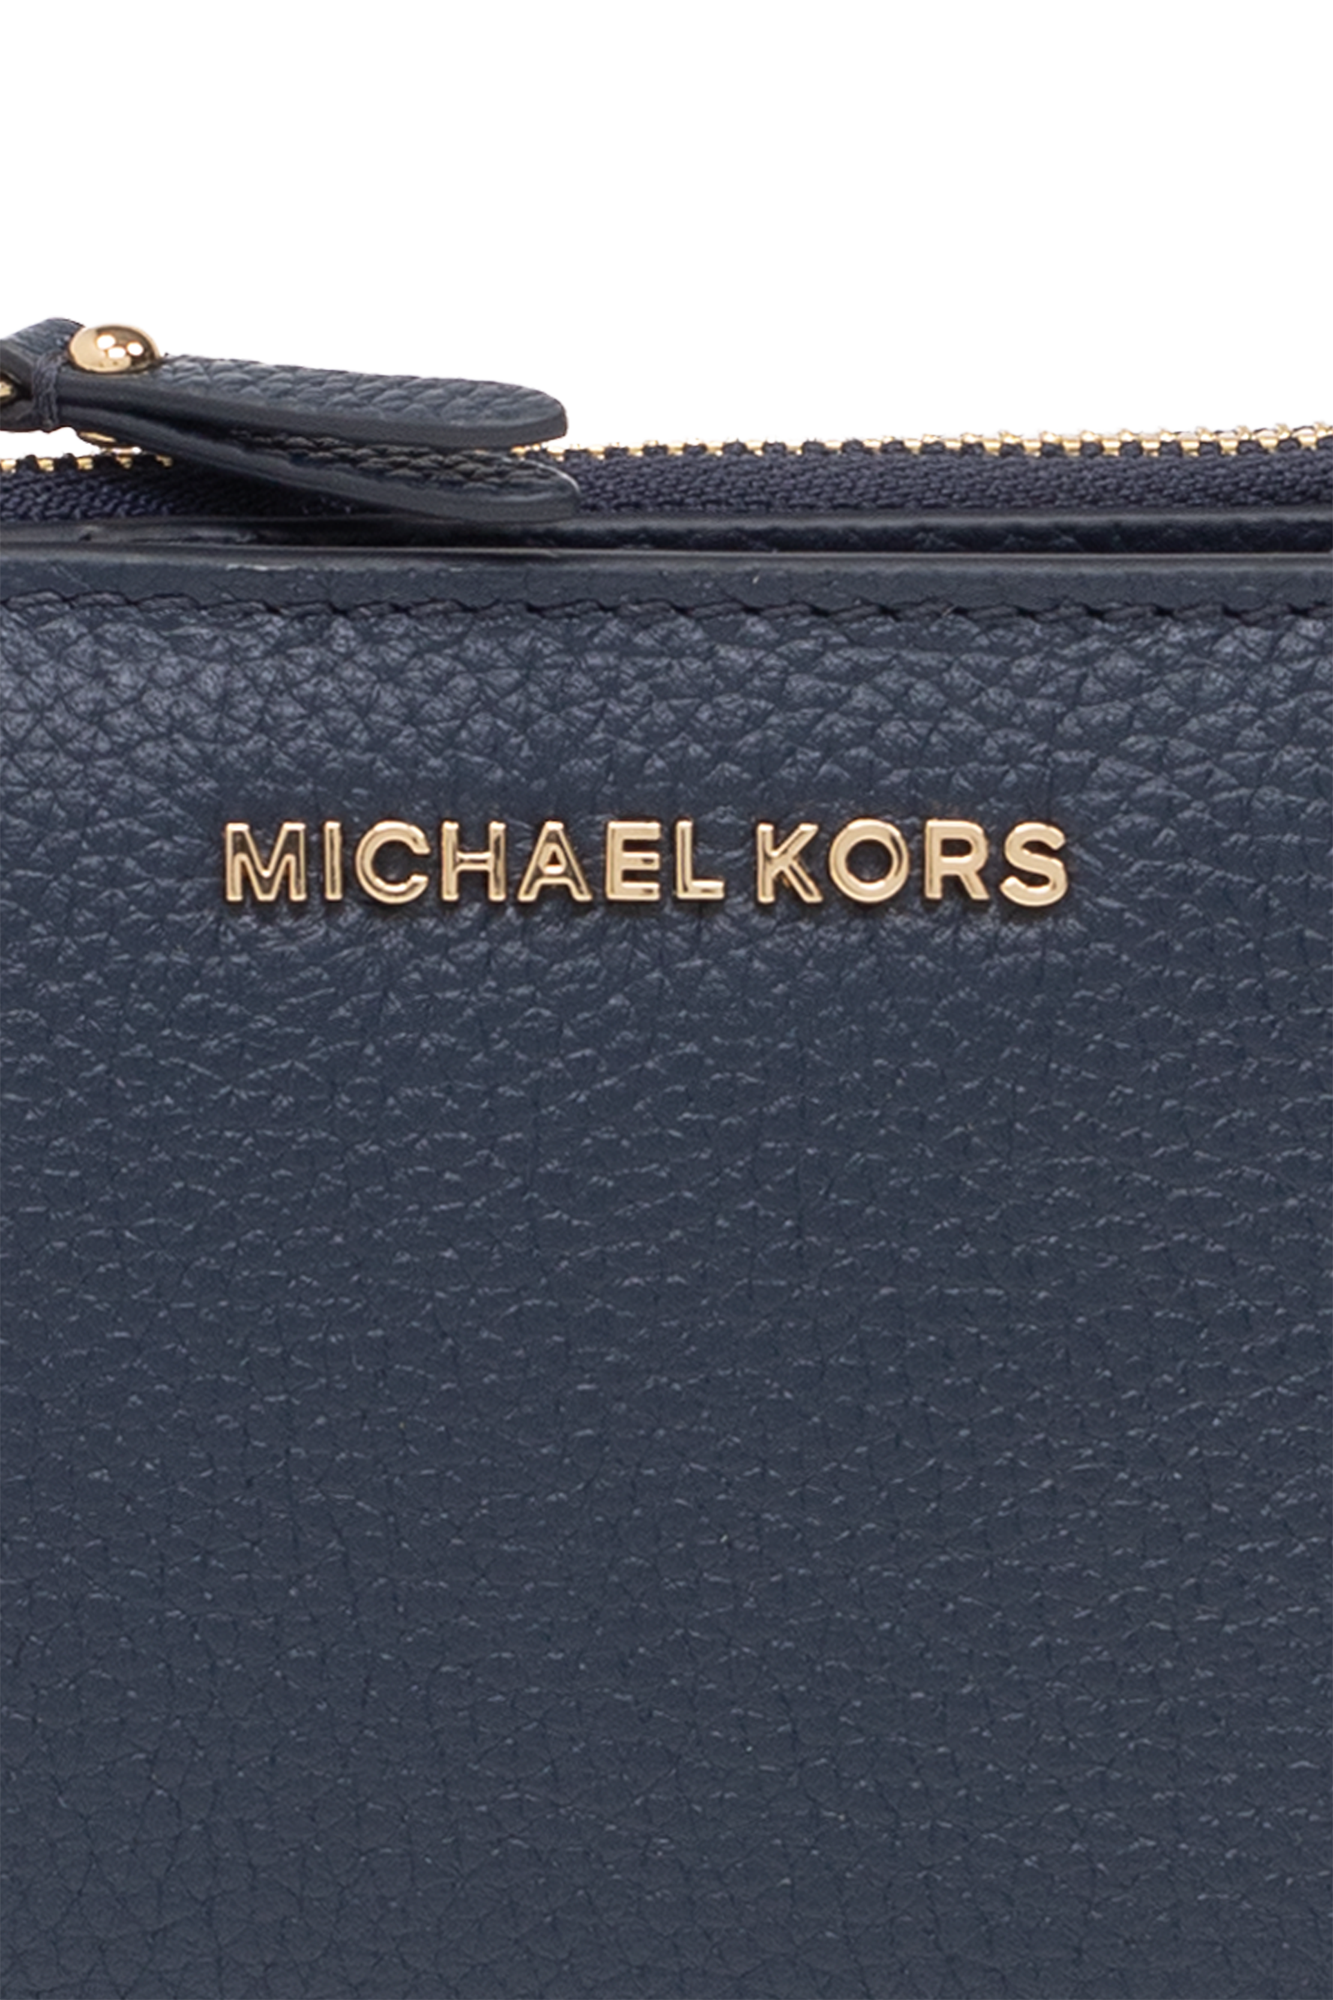 Michael Kors Jet Set Travel Medium Top Zip Card Case Wallet Coin Pouch Rose  Pink  Michael Kors wallet   Fash Brands